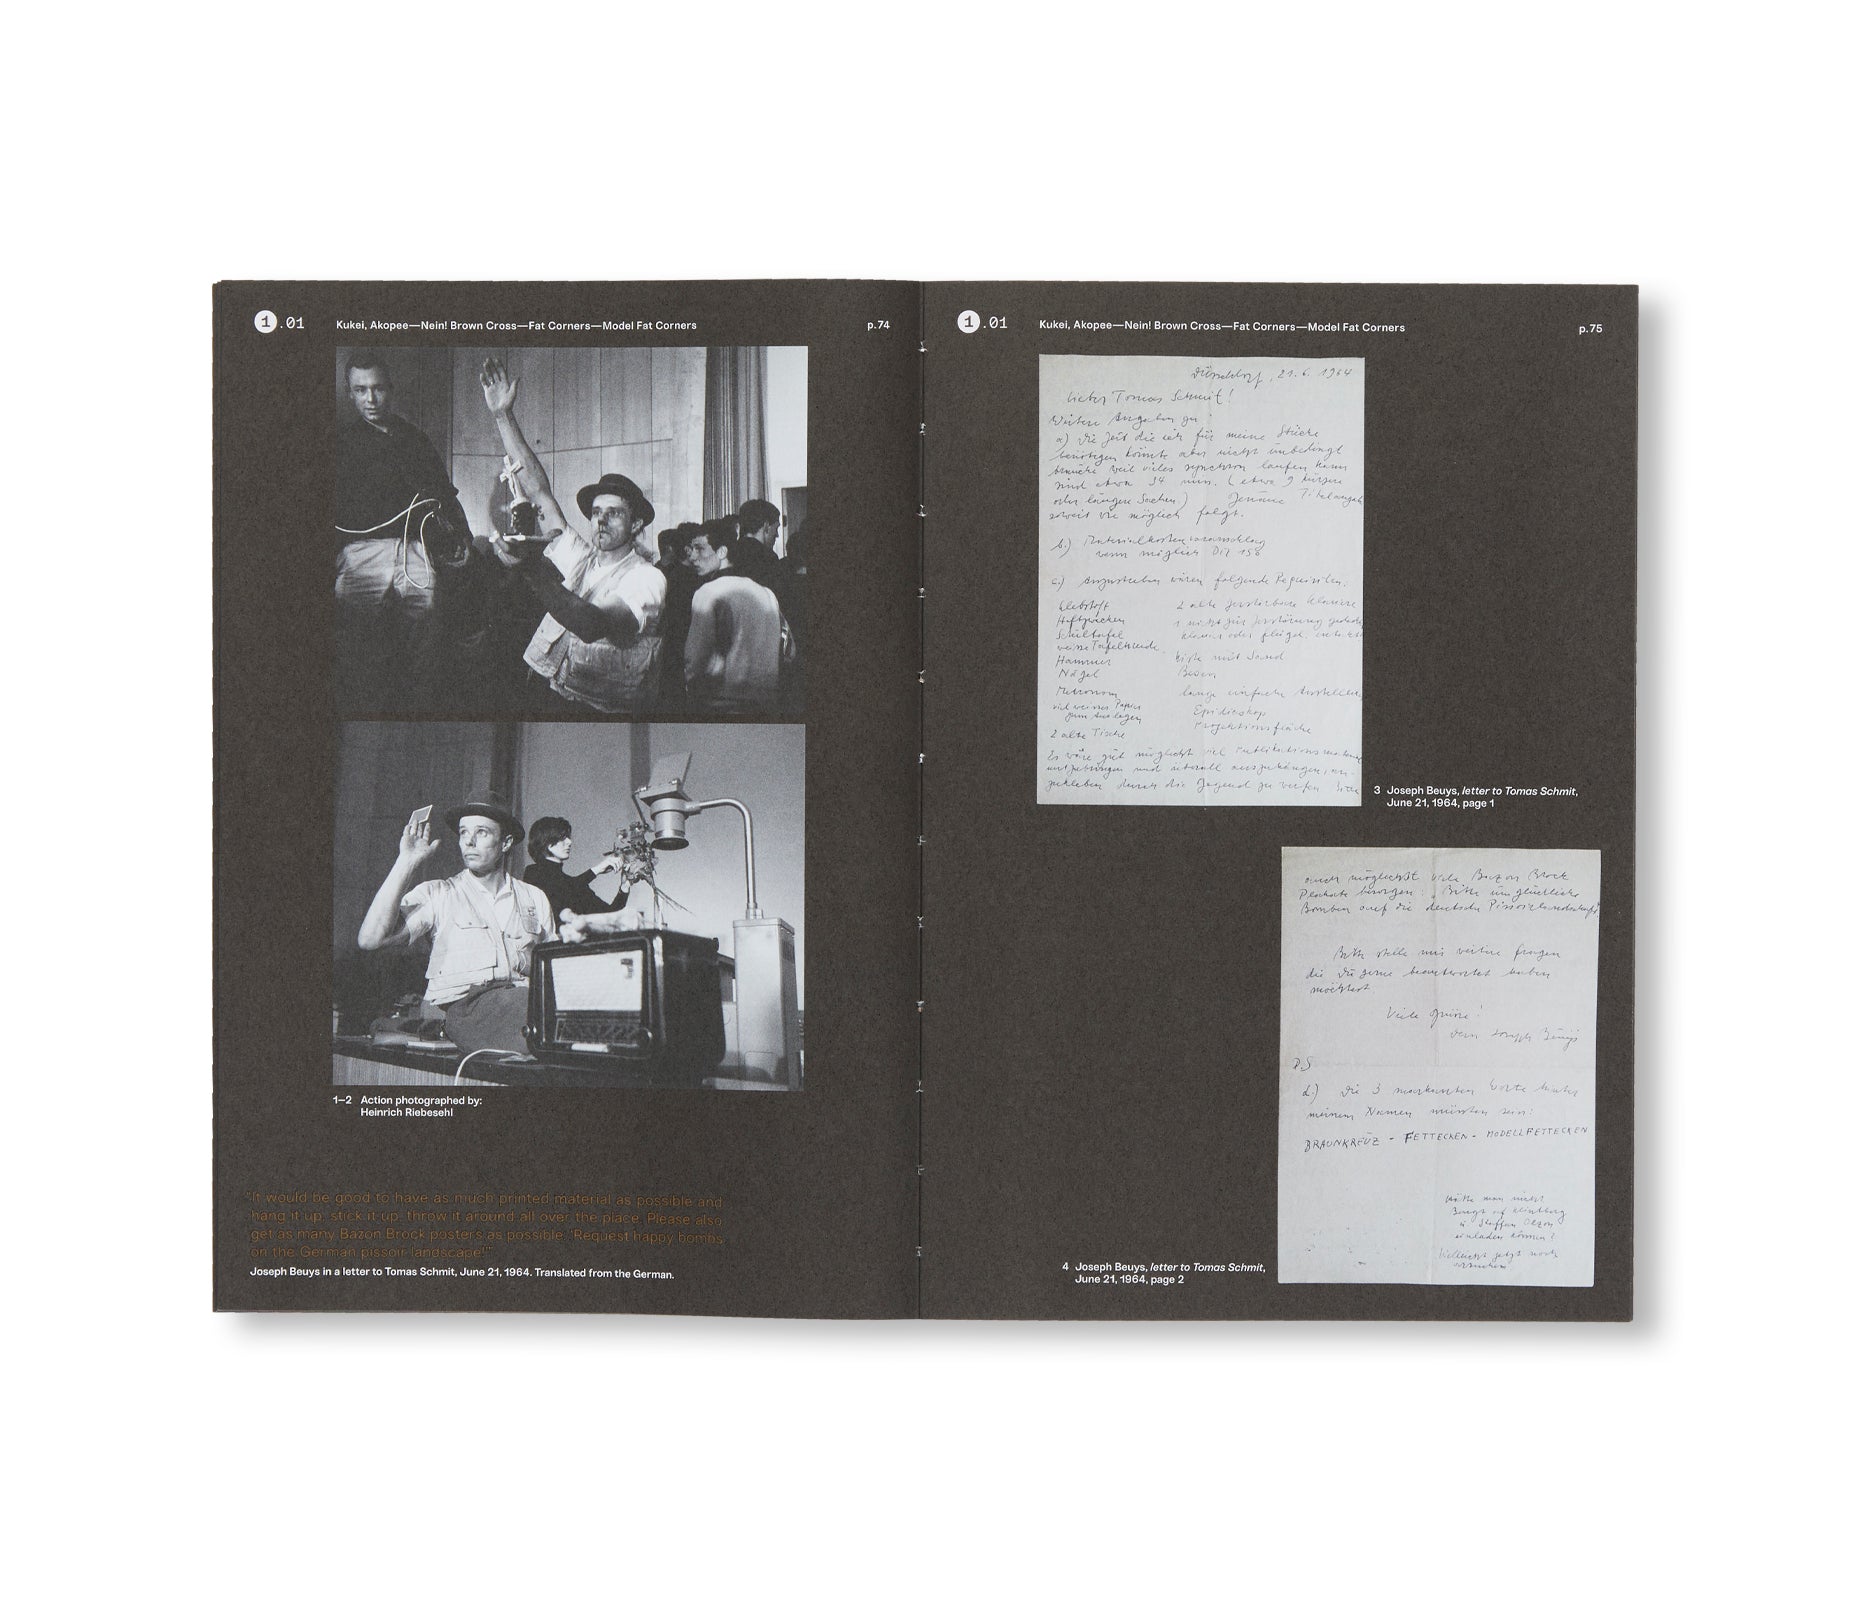 JOSEPH BEUYS: AKTIONEN 1963-1986 by Joseph Beuys